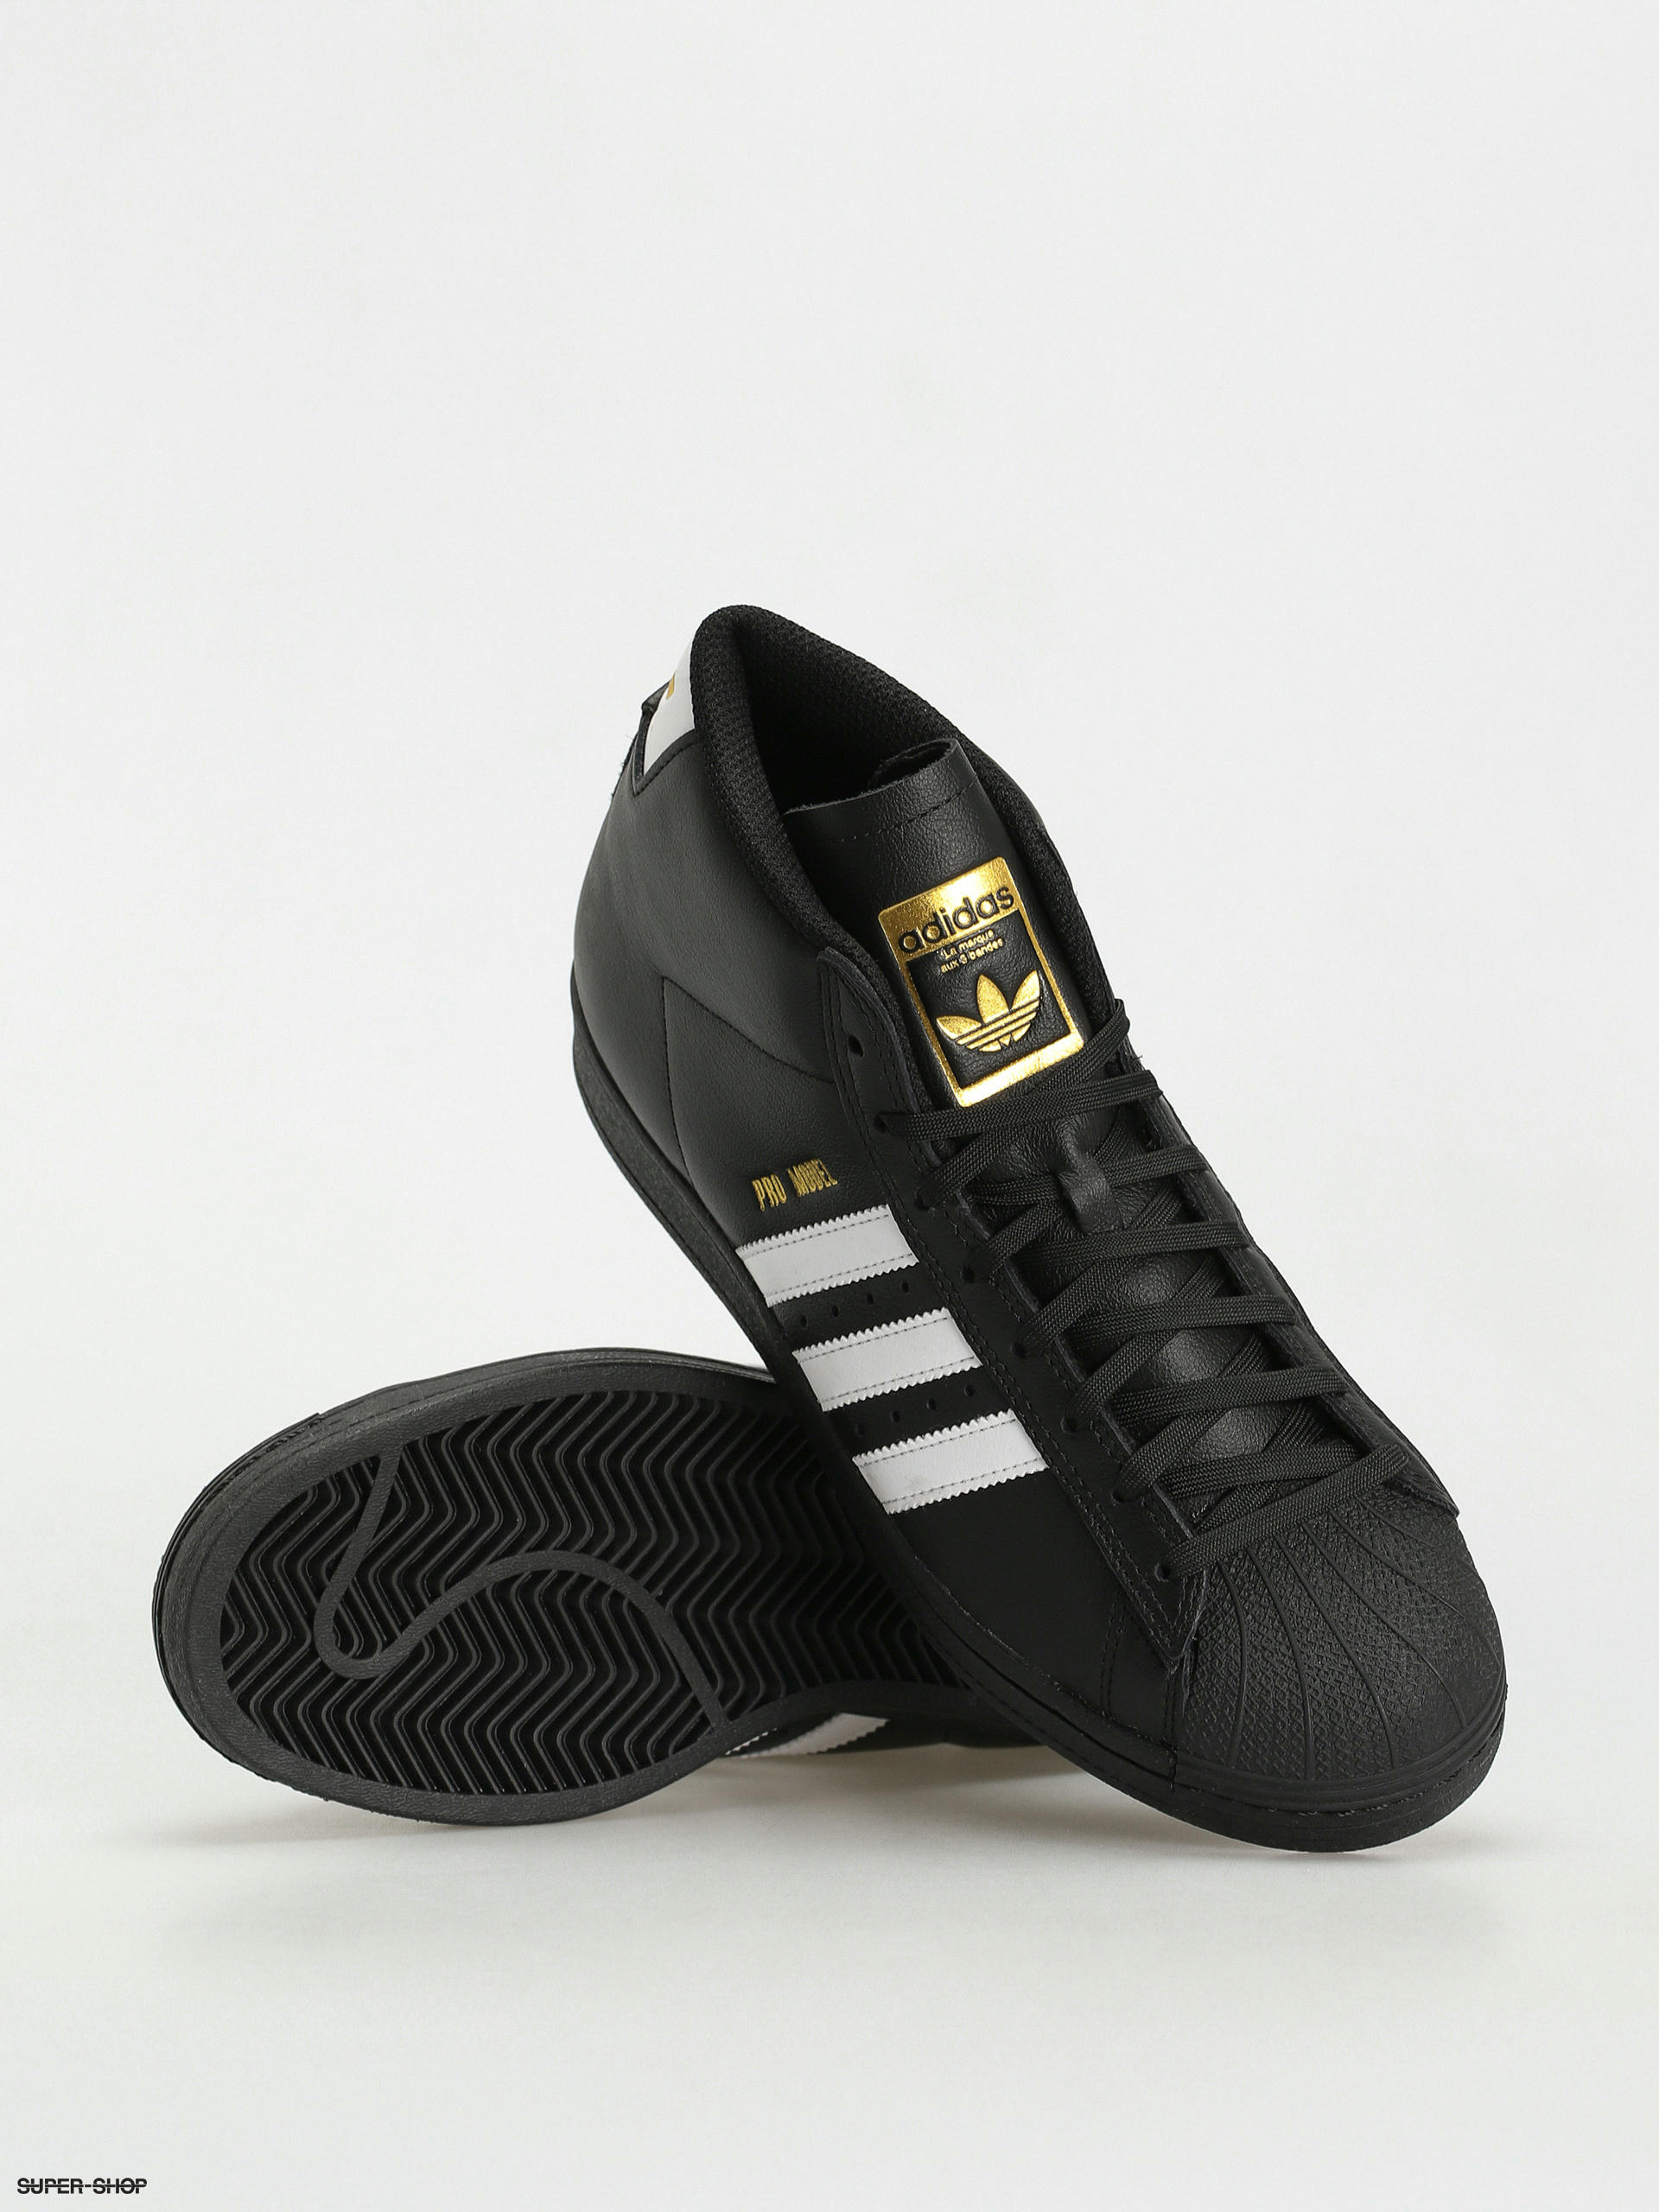 Adidas Pro Model 2G LE Basketball Shoes- White Shell Toe Men's US Size 18 |  eBay